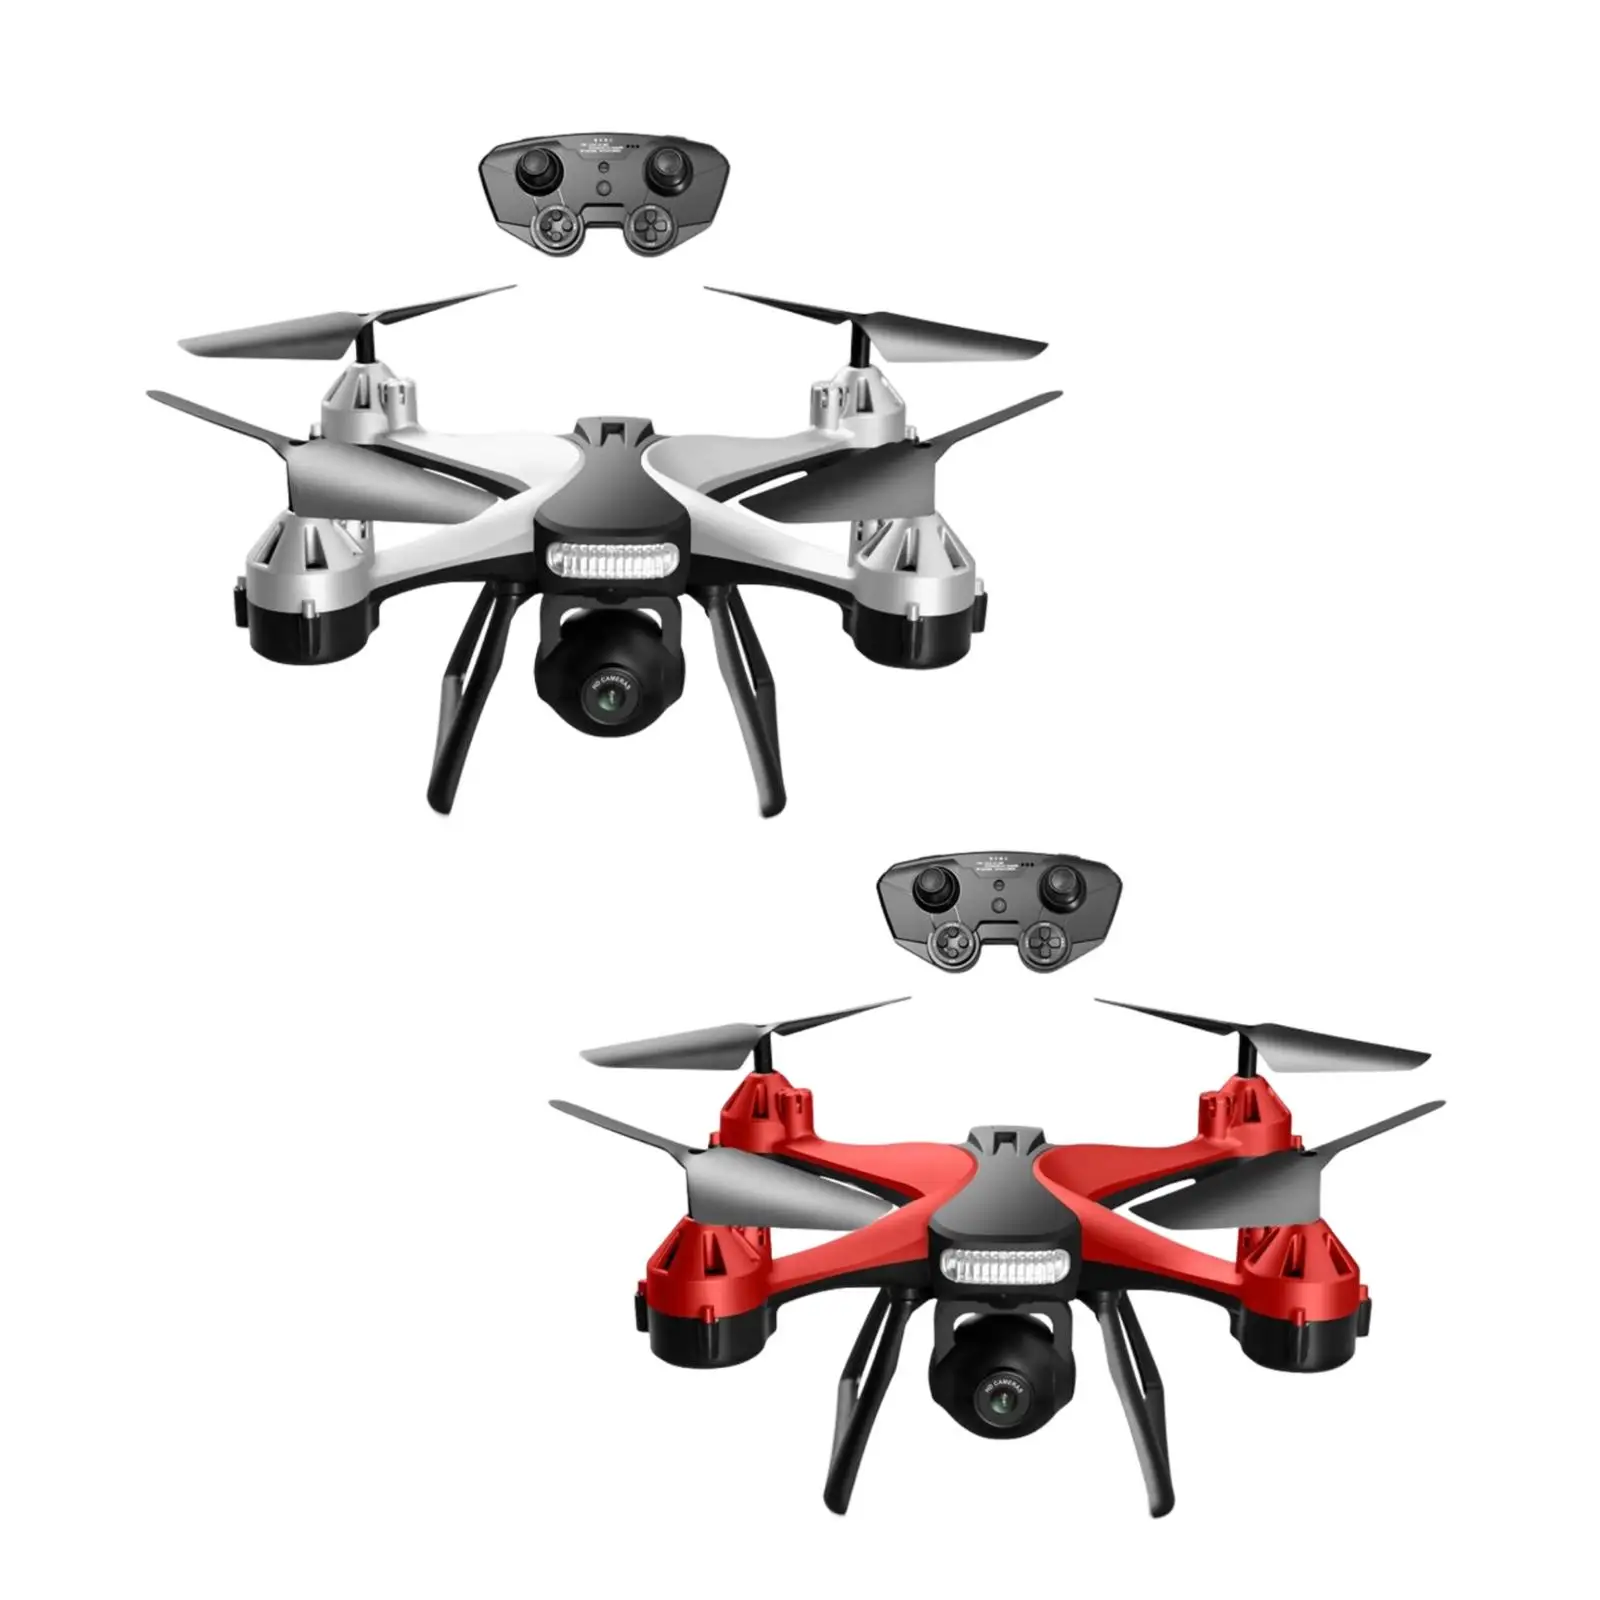 4K Camera Drone Quadcopter Remote Control Aerodynamic Streamline Design Phone Control Flying Hovering System LED Night Light